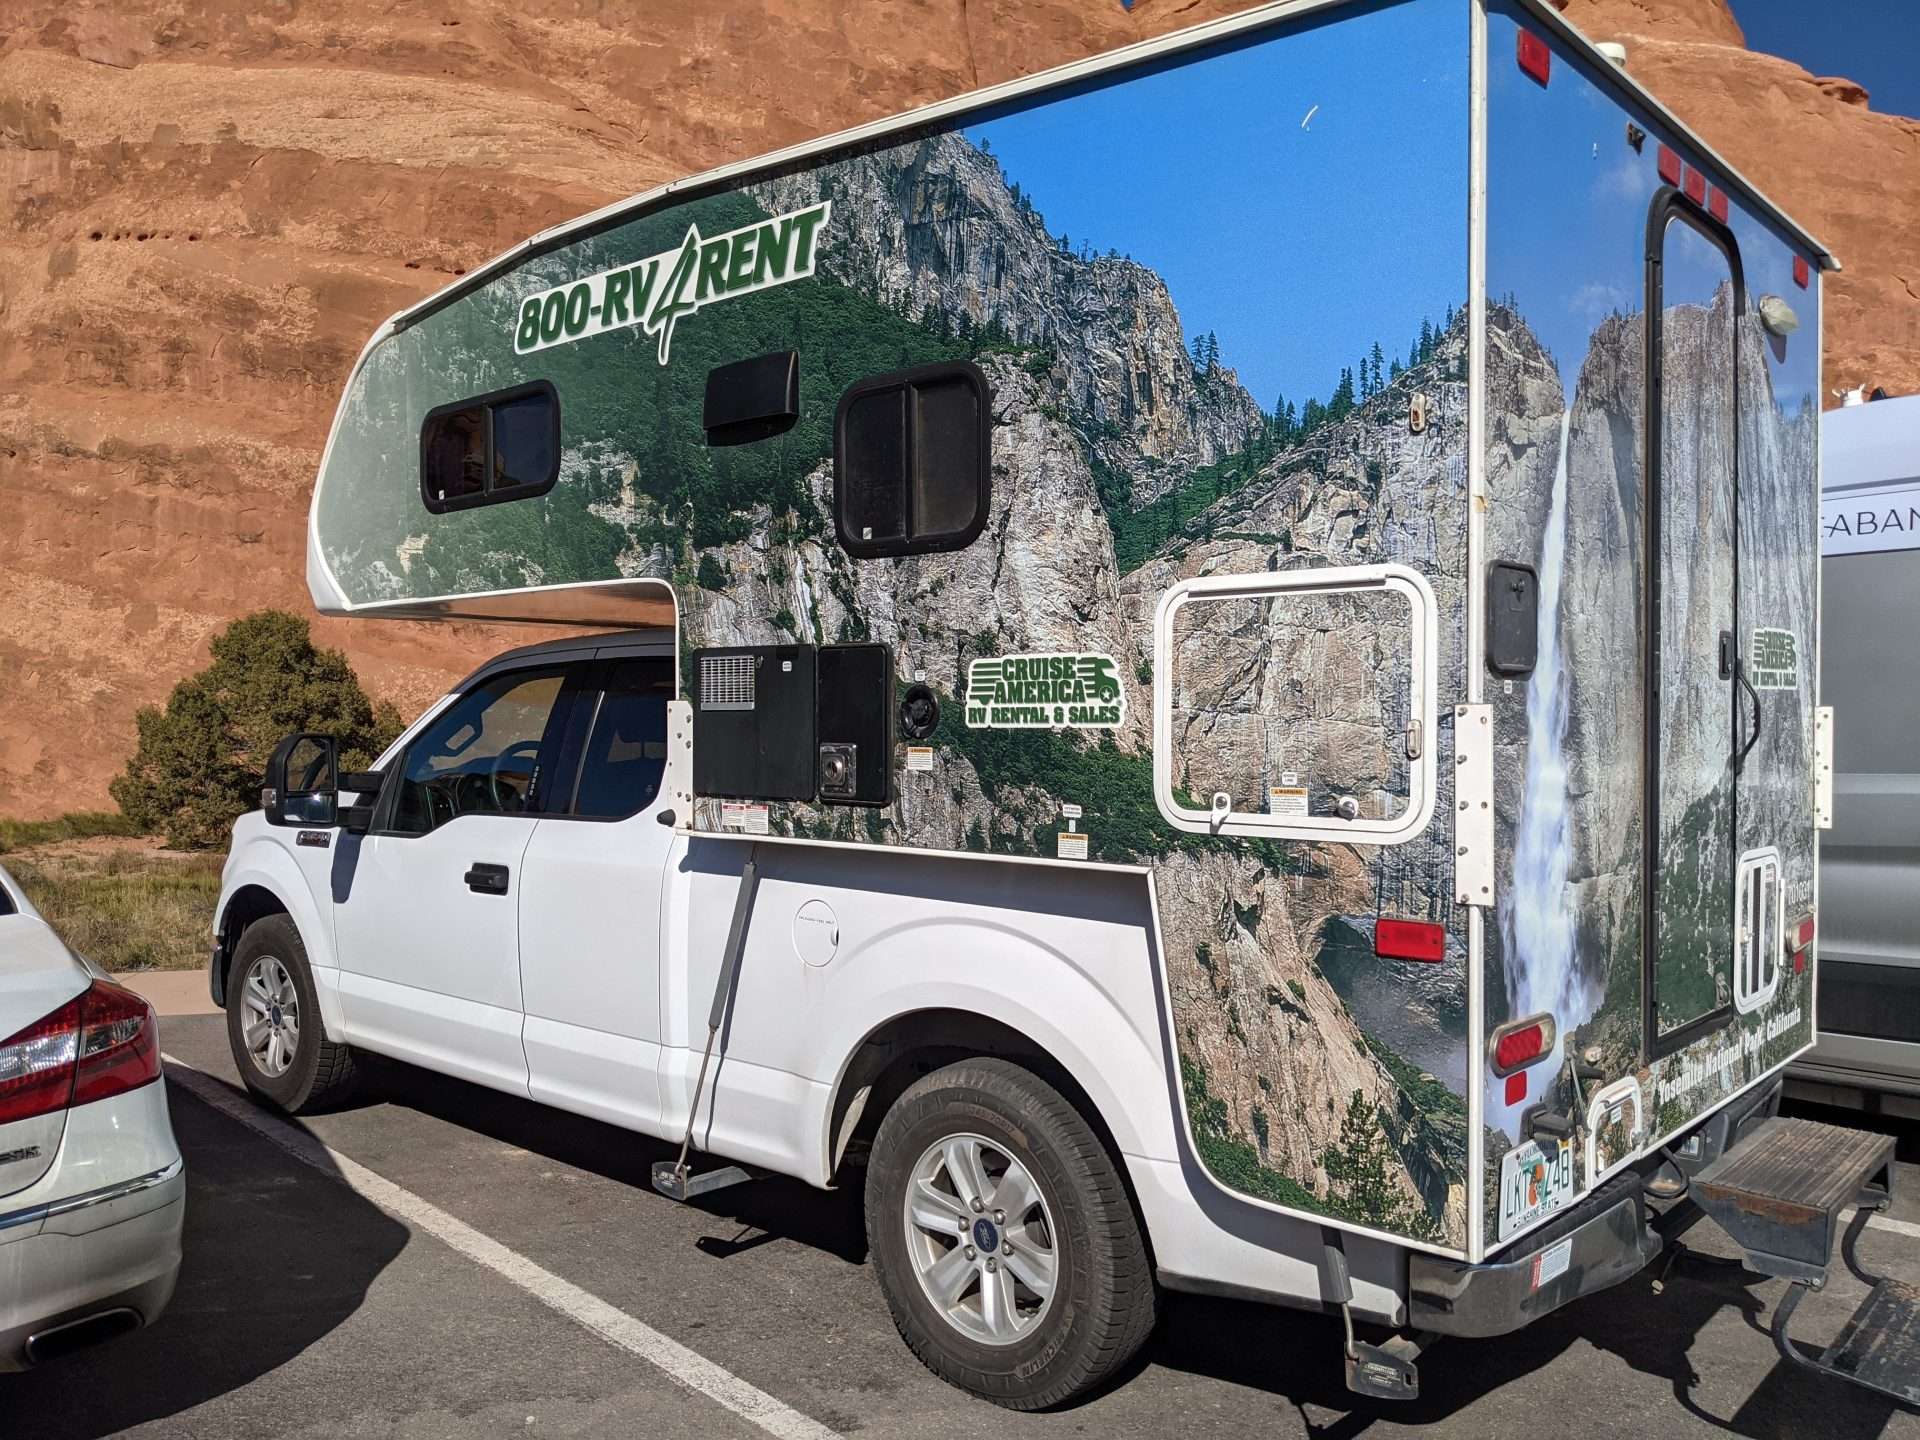 Truck camper for rent in parking lot